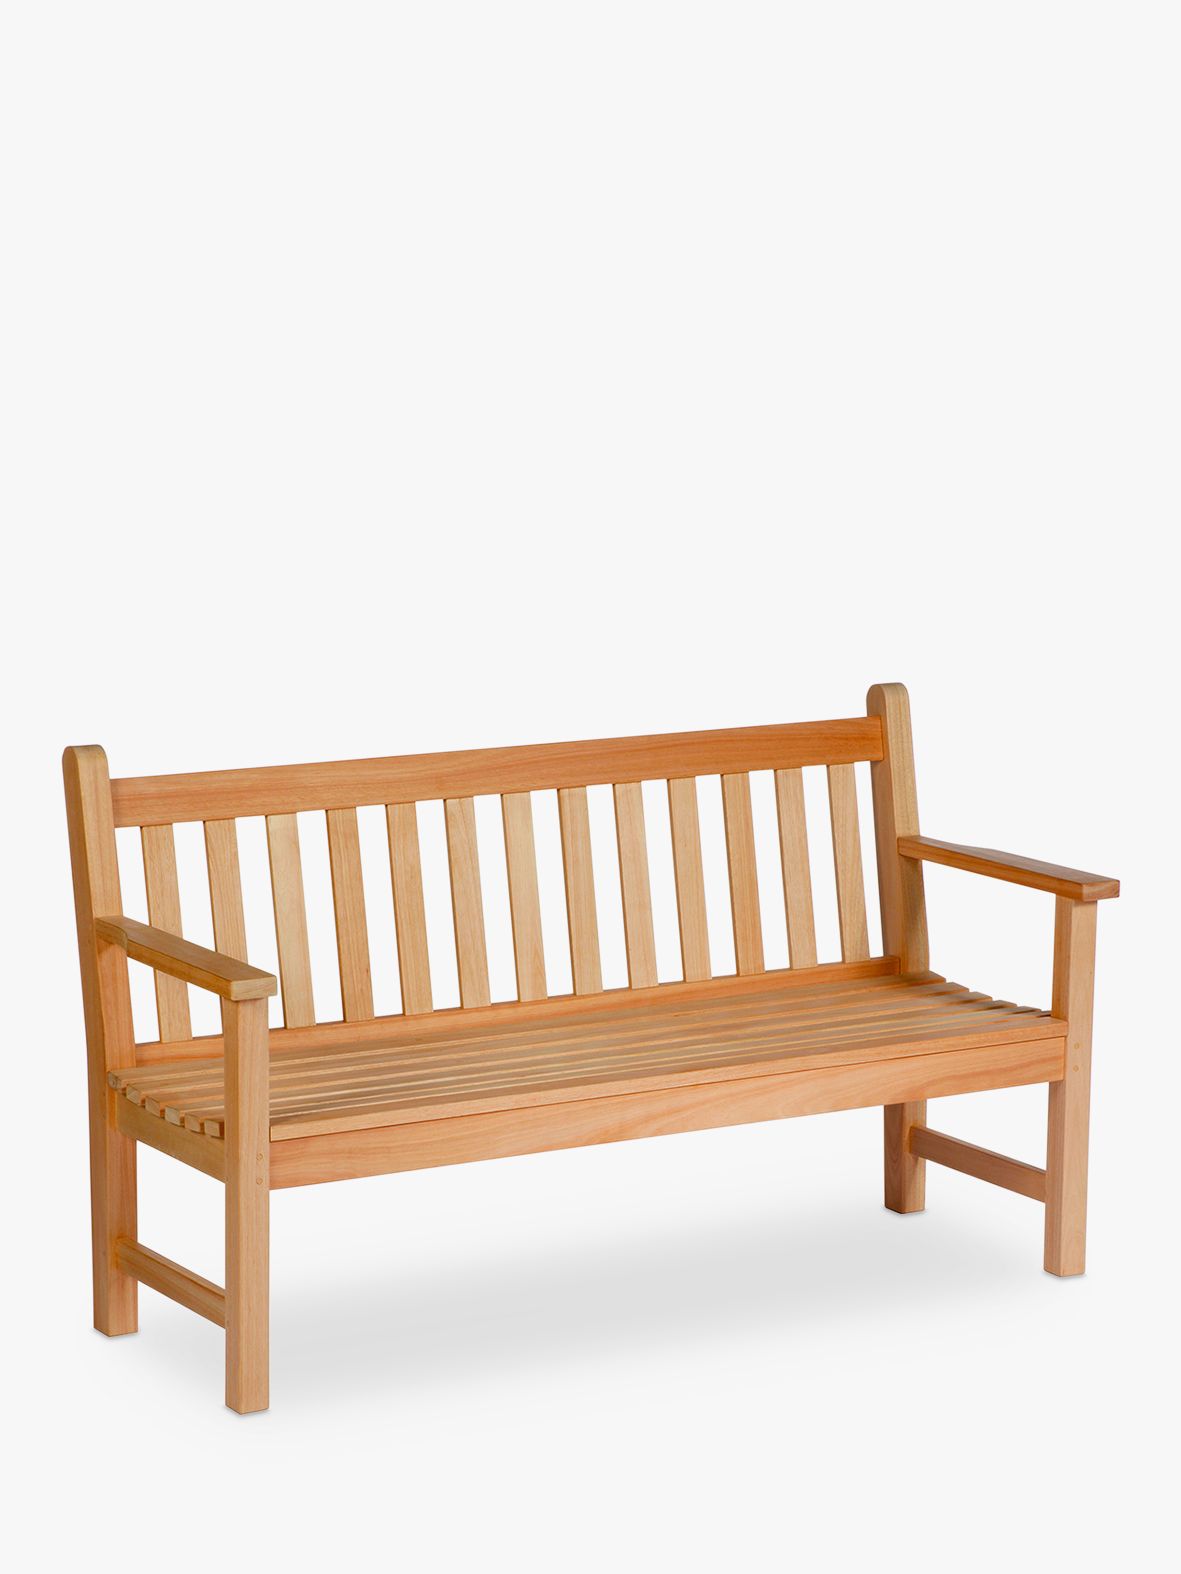 Photo of Barlow tyrie lavenham 3-seat eucalyptus wood garden bench